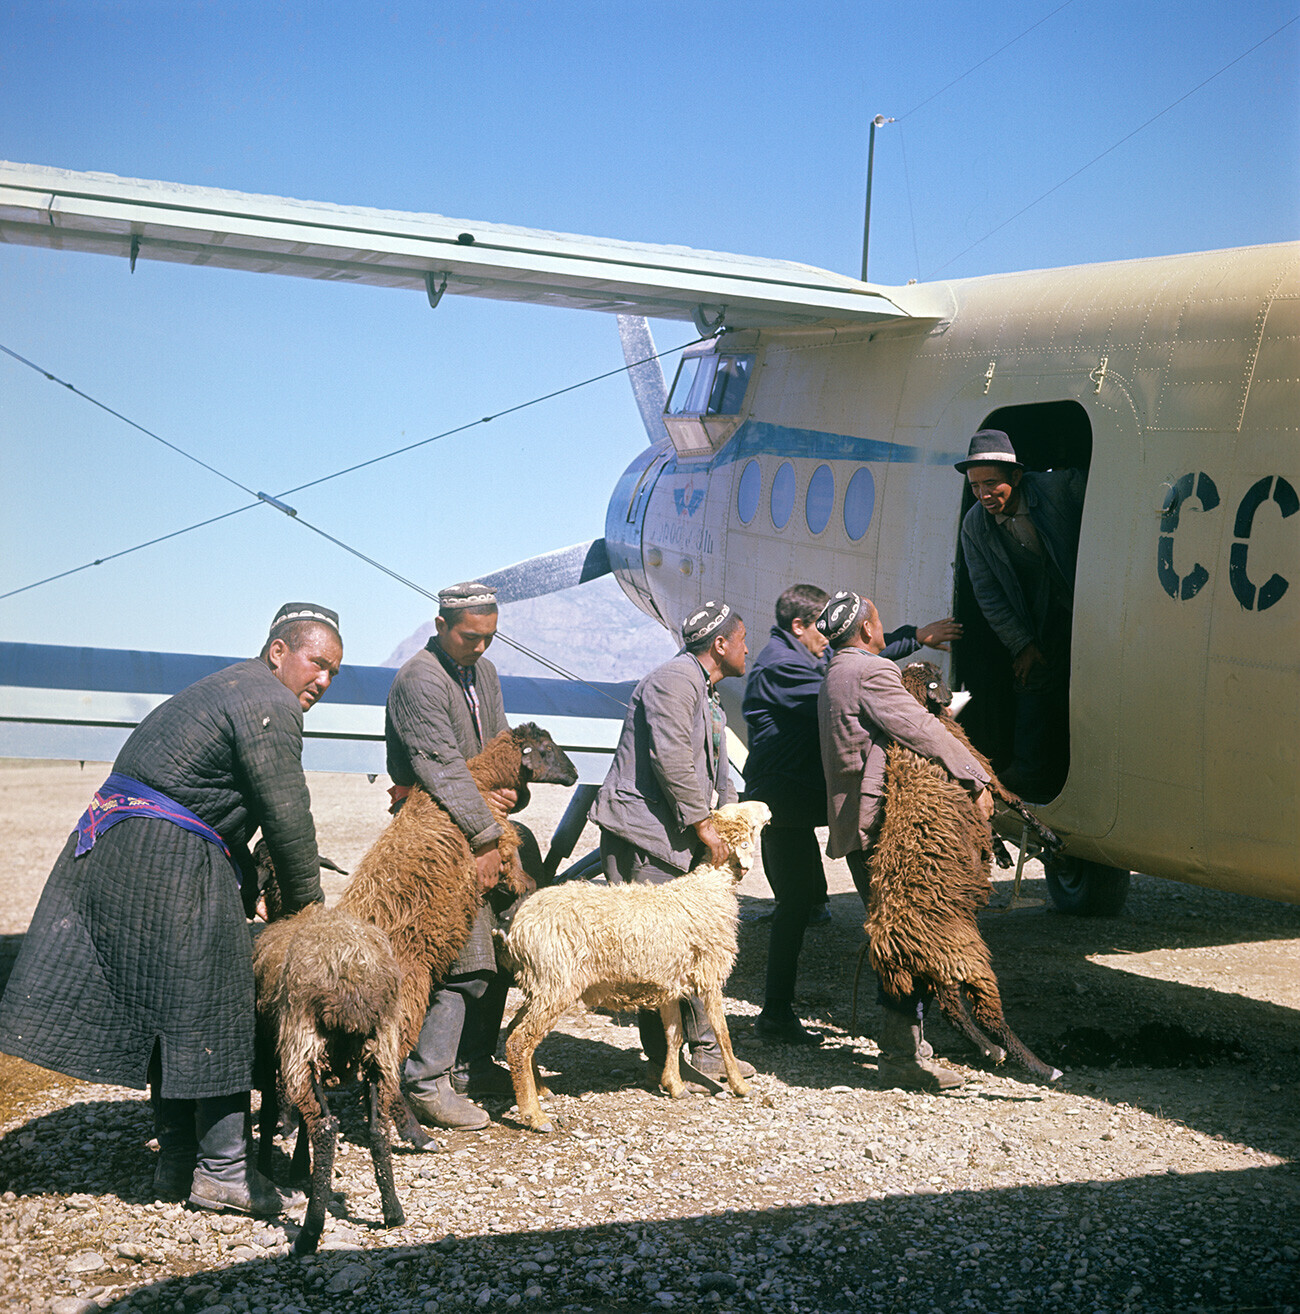 Товарење овци во авион. Андижанска област, Узбечка ССР.

